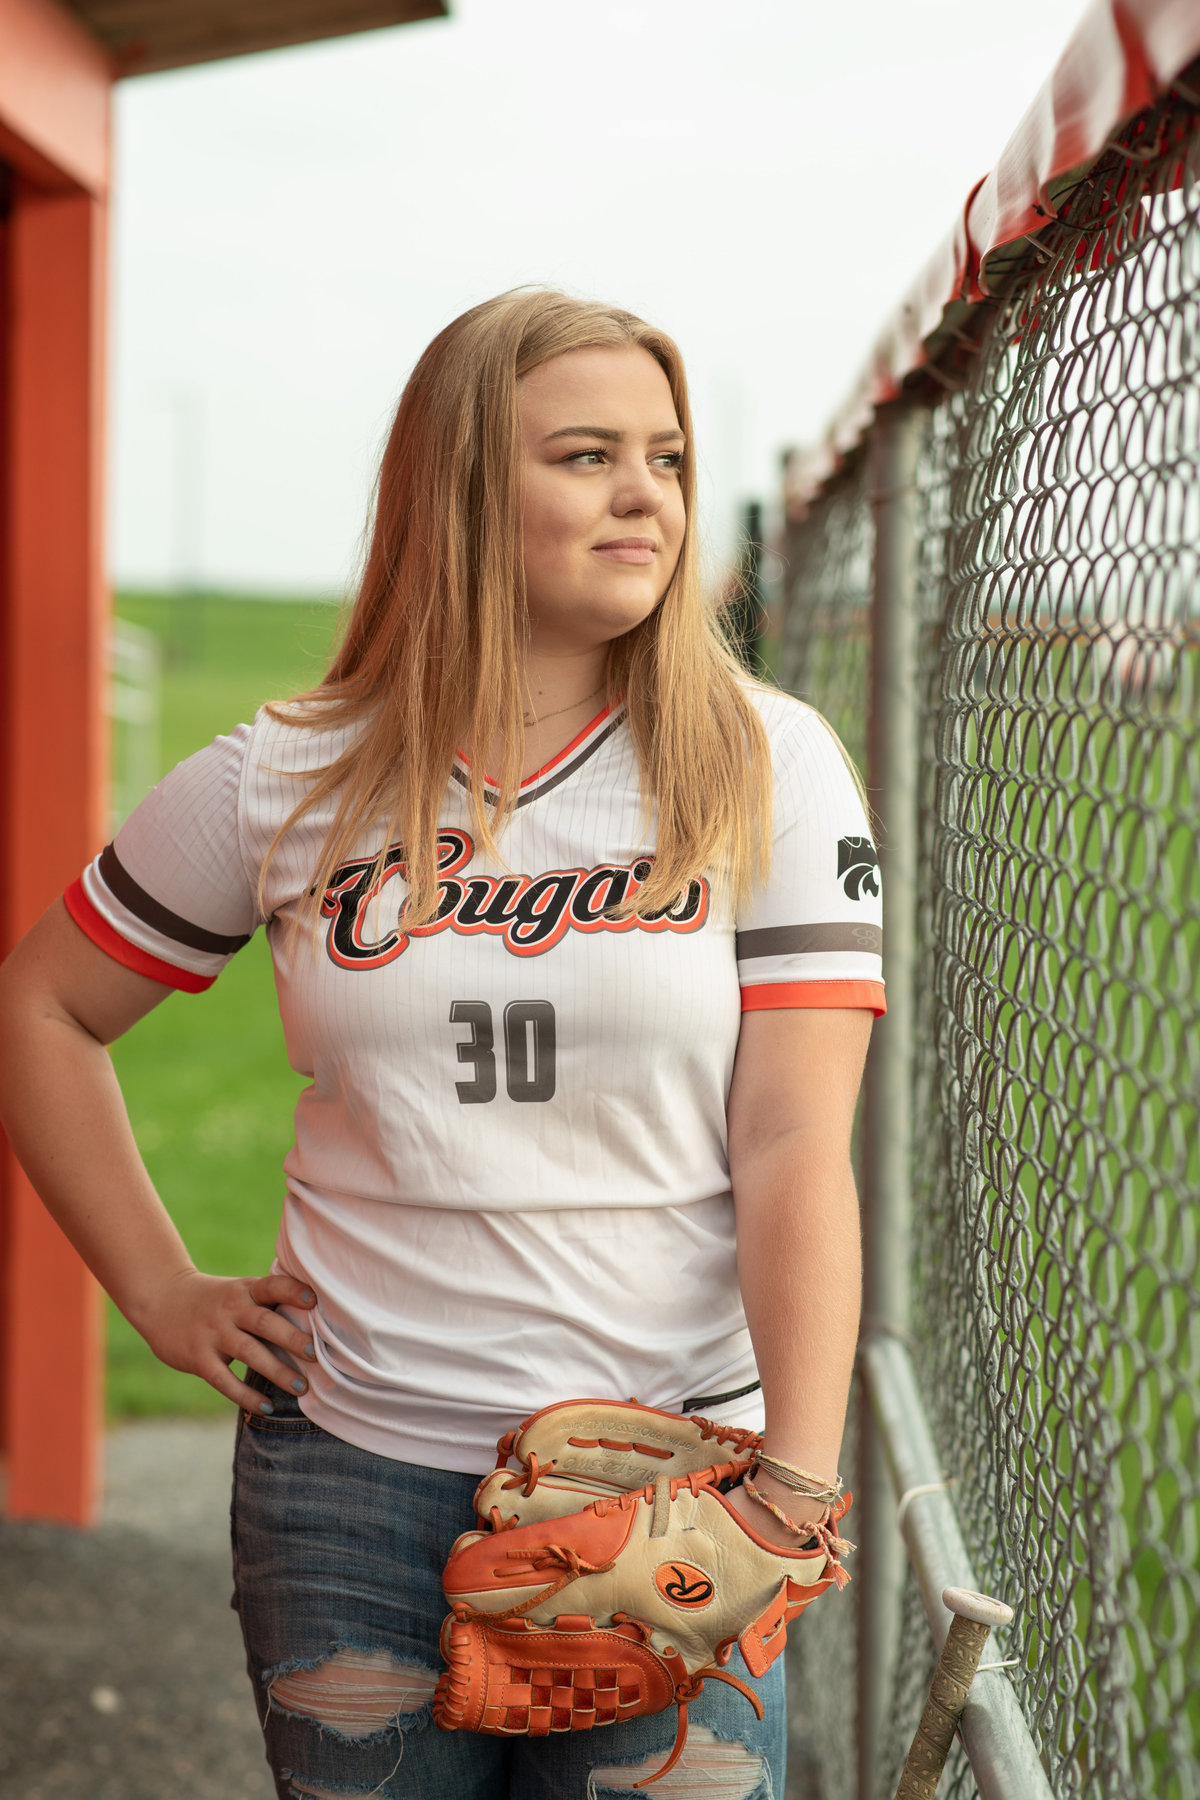 Senior girl in softball jersey and glove